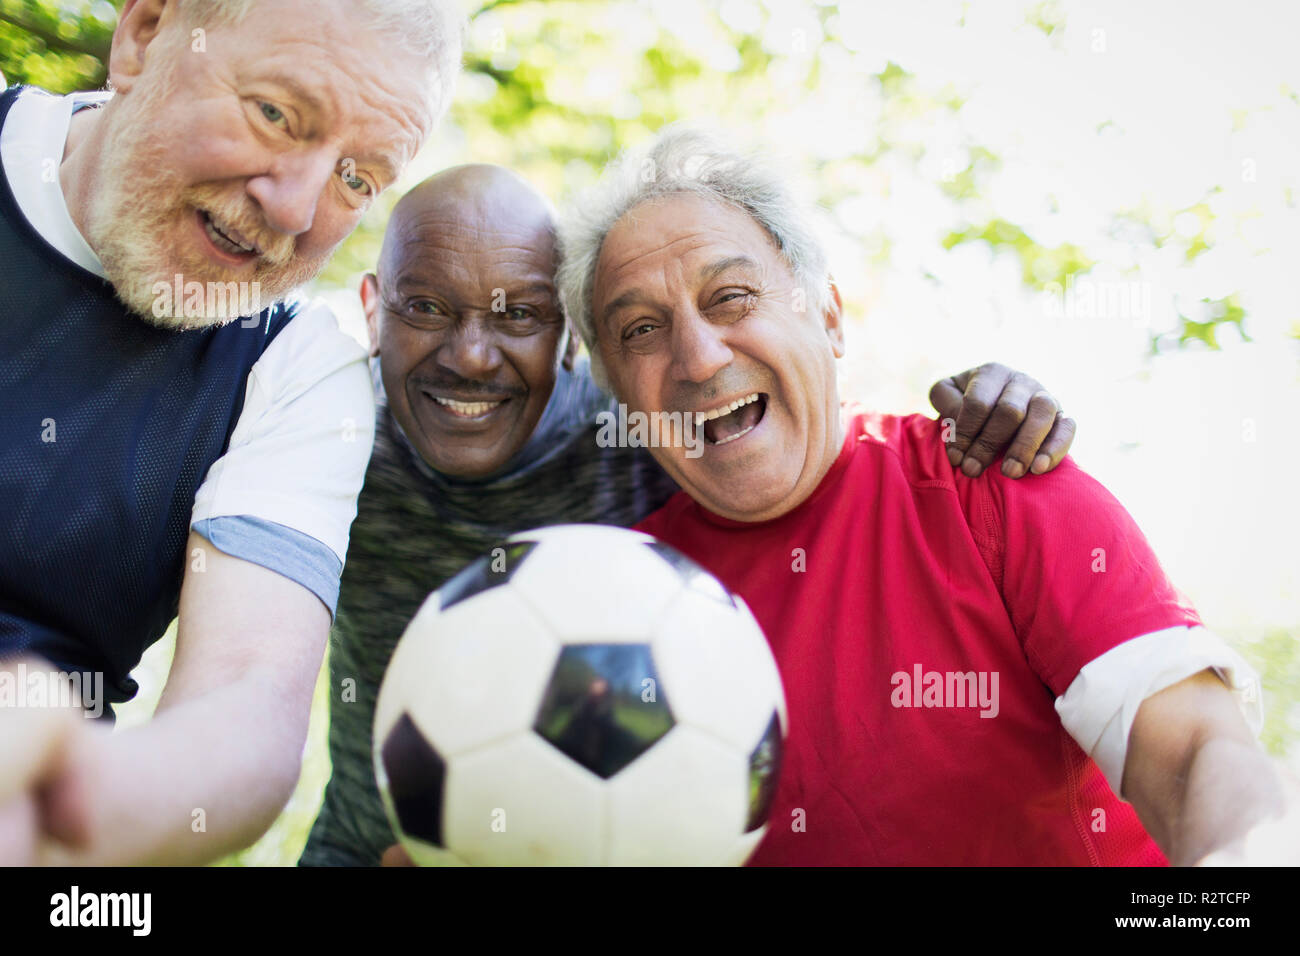 Portrait active senior men friends playing soccer Stock Photo